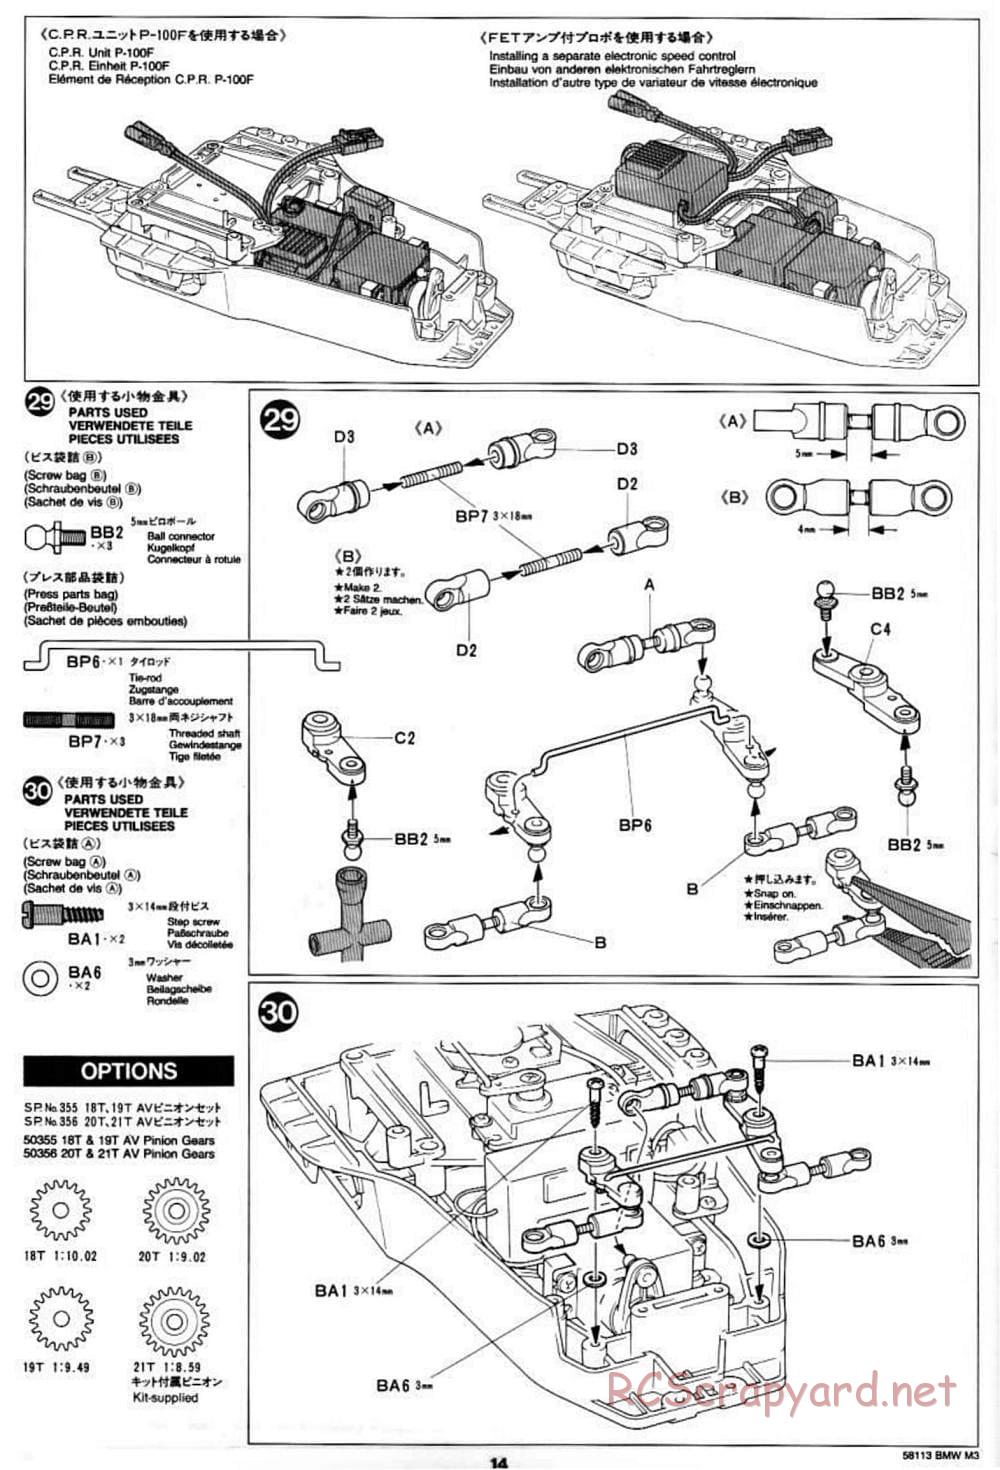 Tamiya - Schnitzer BMW M3 Sport Evo - TA-01 Chassis - Manual - Page 14